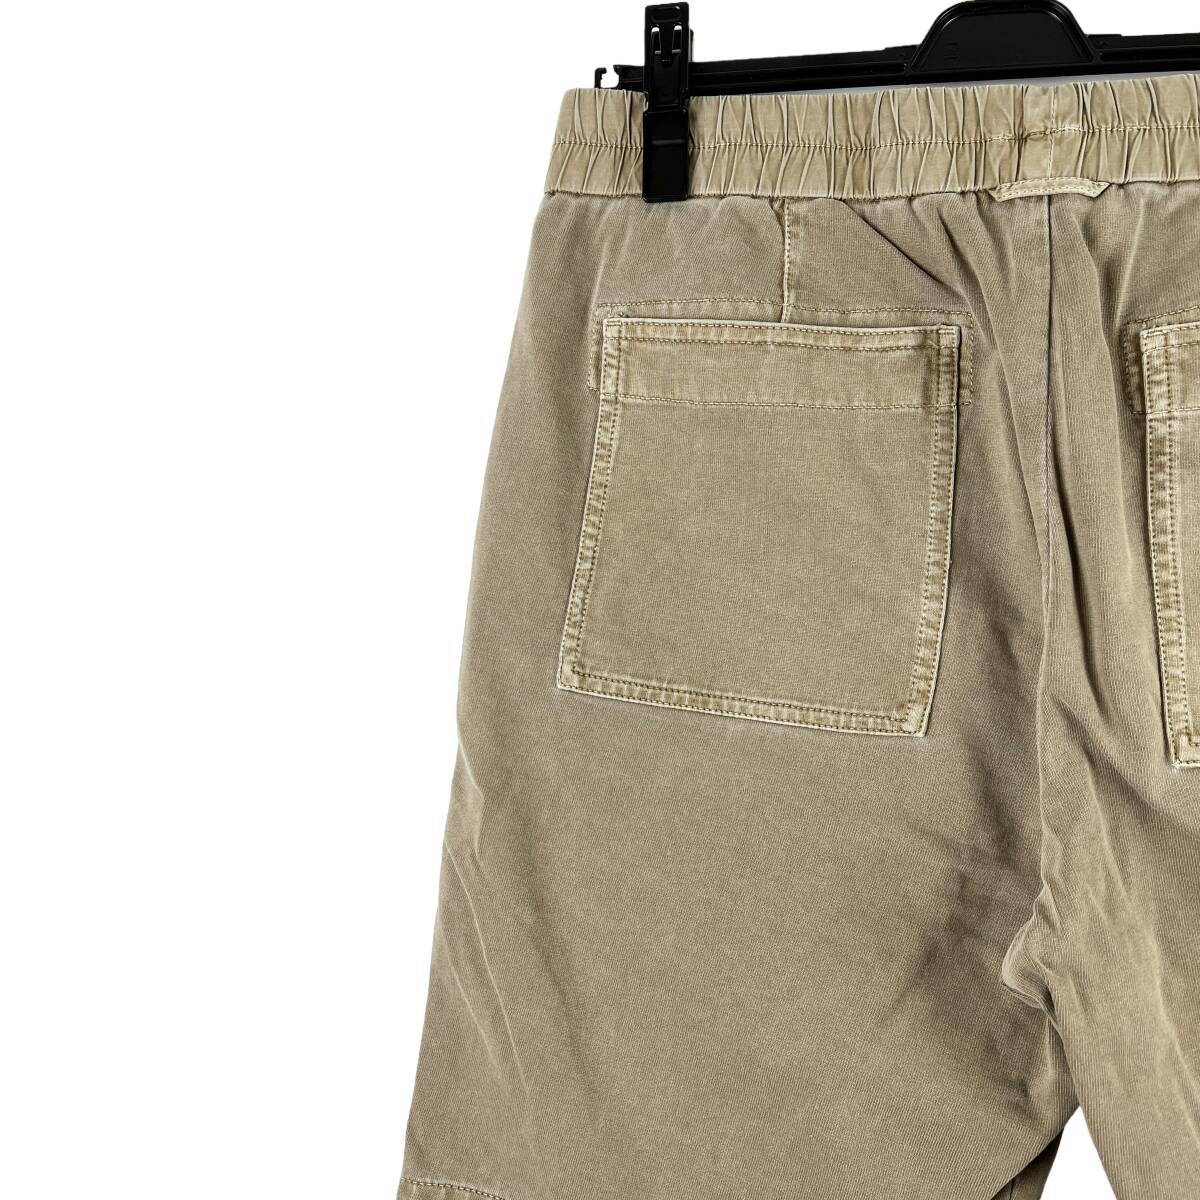 JAMESPERSE(ジェームスパース) Bayside Casual Cotton Short Pants (brown)